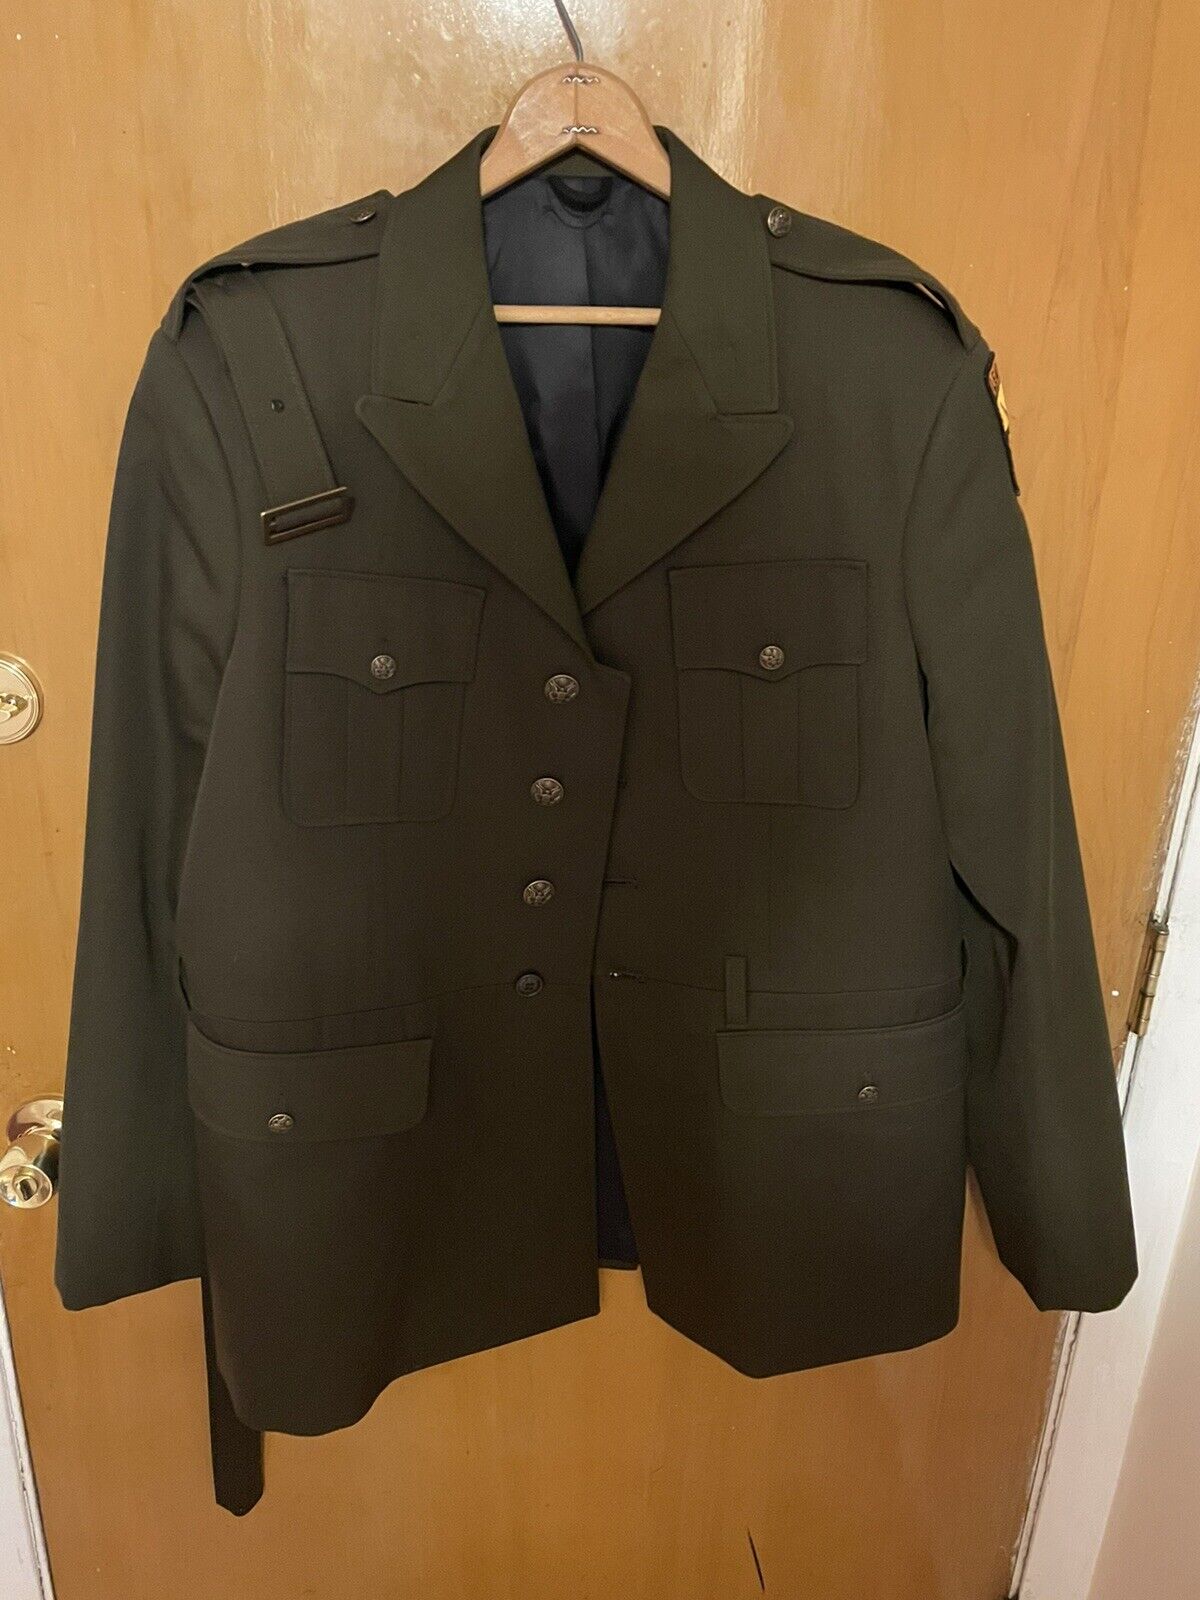 Army Green Service Uniform Men\'s AGSU Jacket Coat 46 R-C